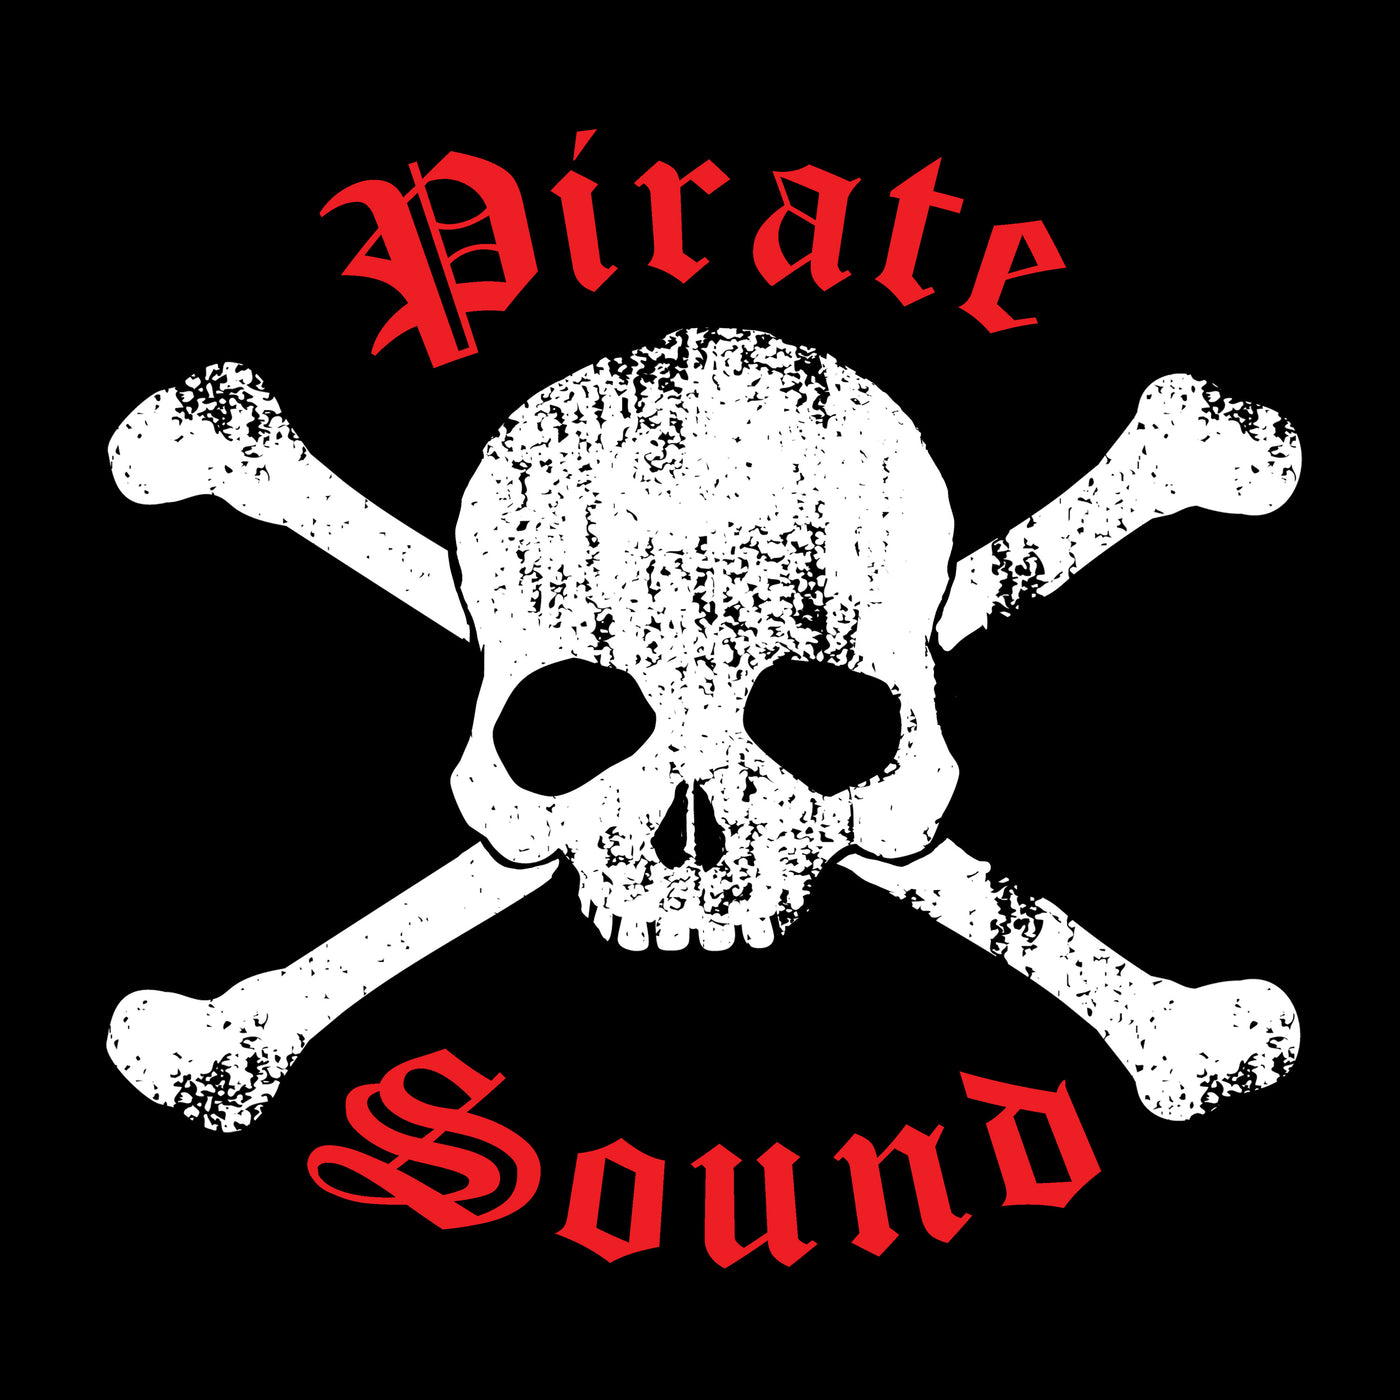 Pirate Sound - Fem